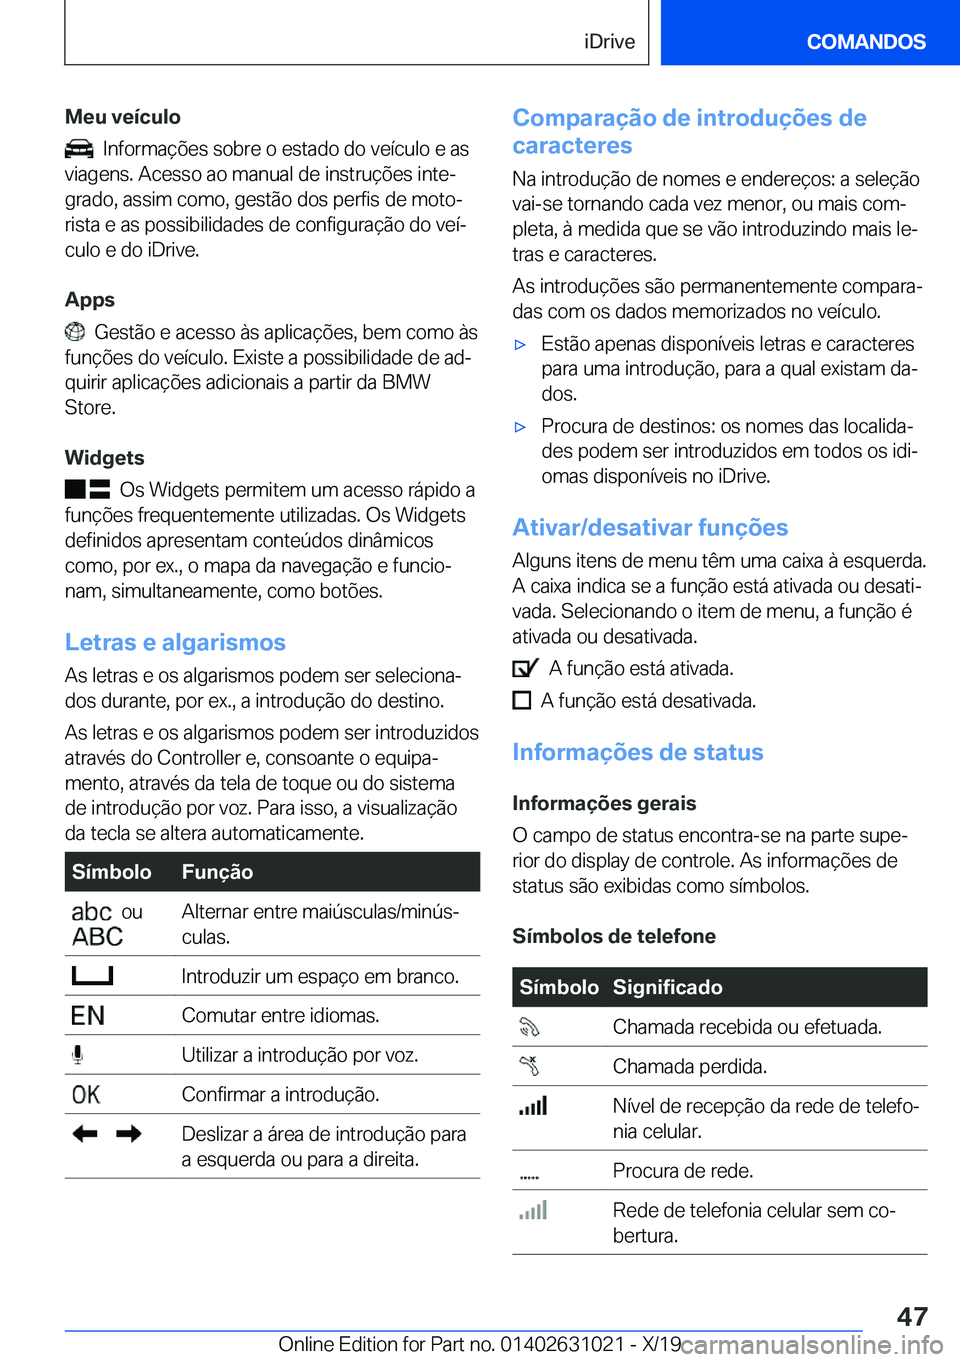 BMW 2 SERIES GRAN COUPE 2020  Manual do condutor (in Portuguese) �M�e�u��v�e�